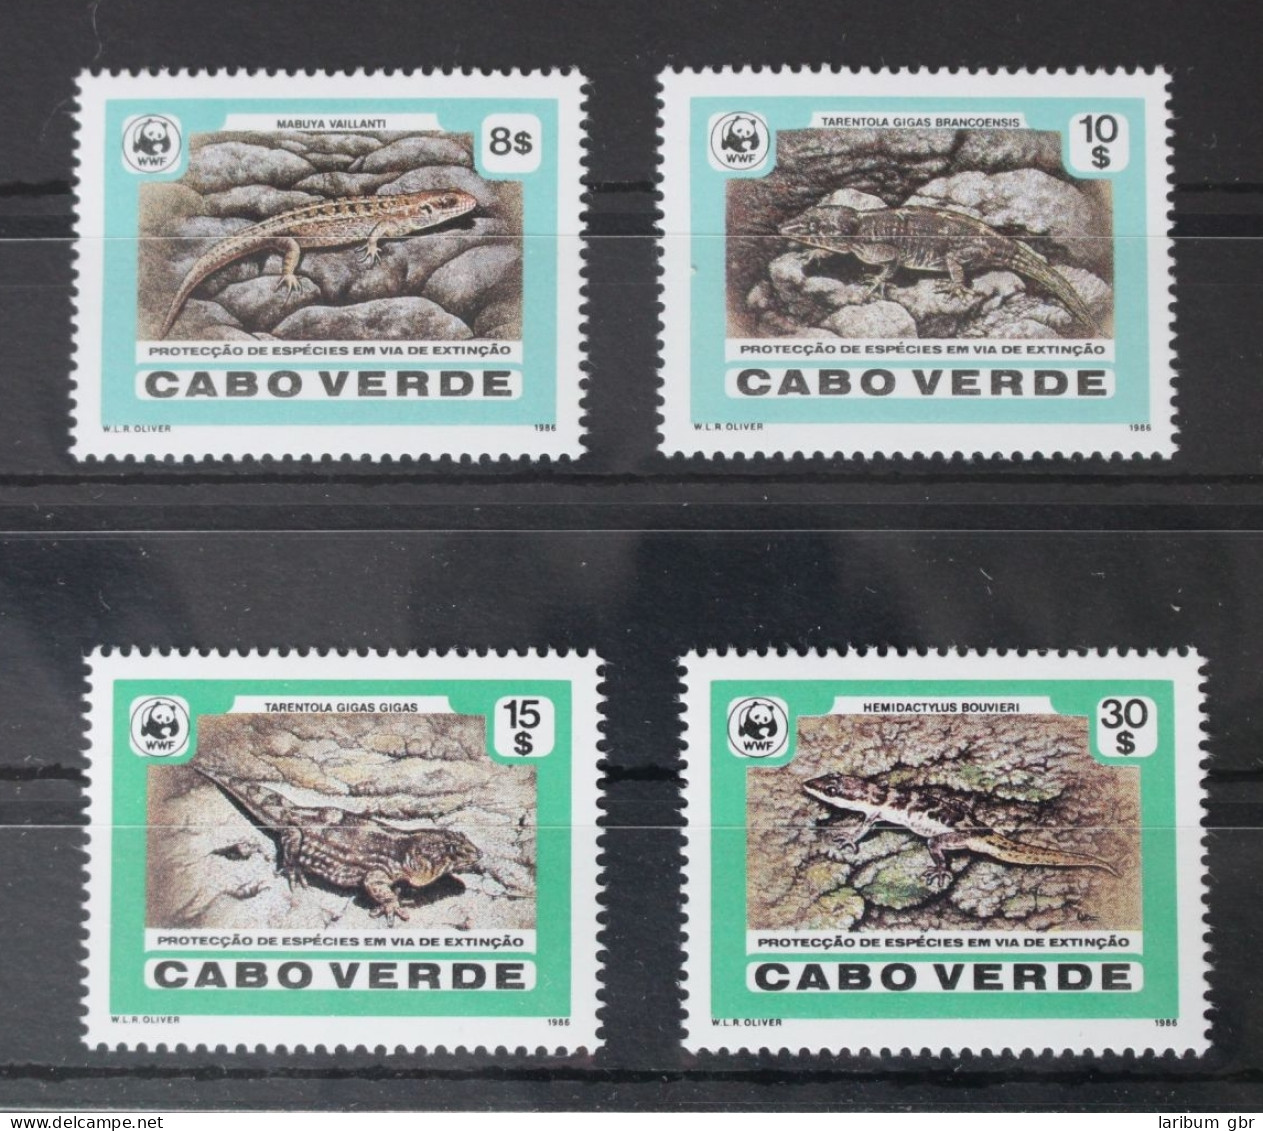 Kap Verde 500-503 Postfrisch Reptilien #WC943 - Cape Verde